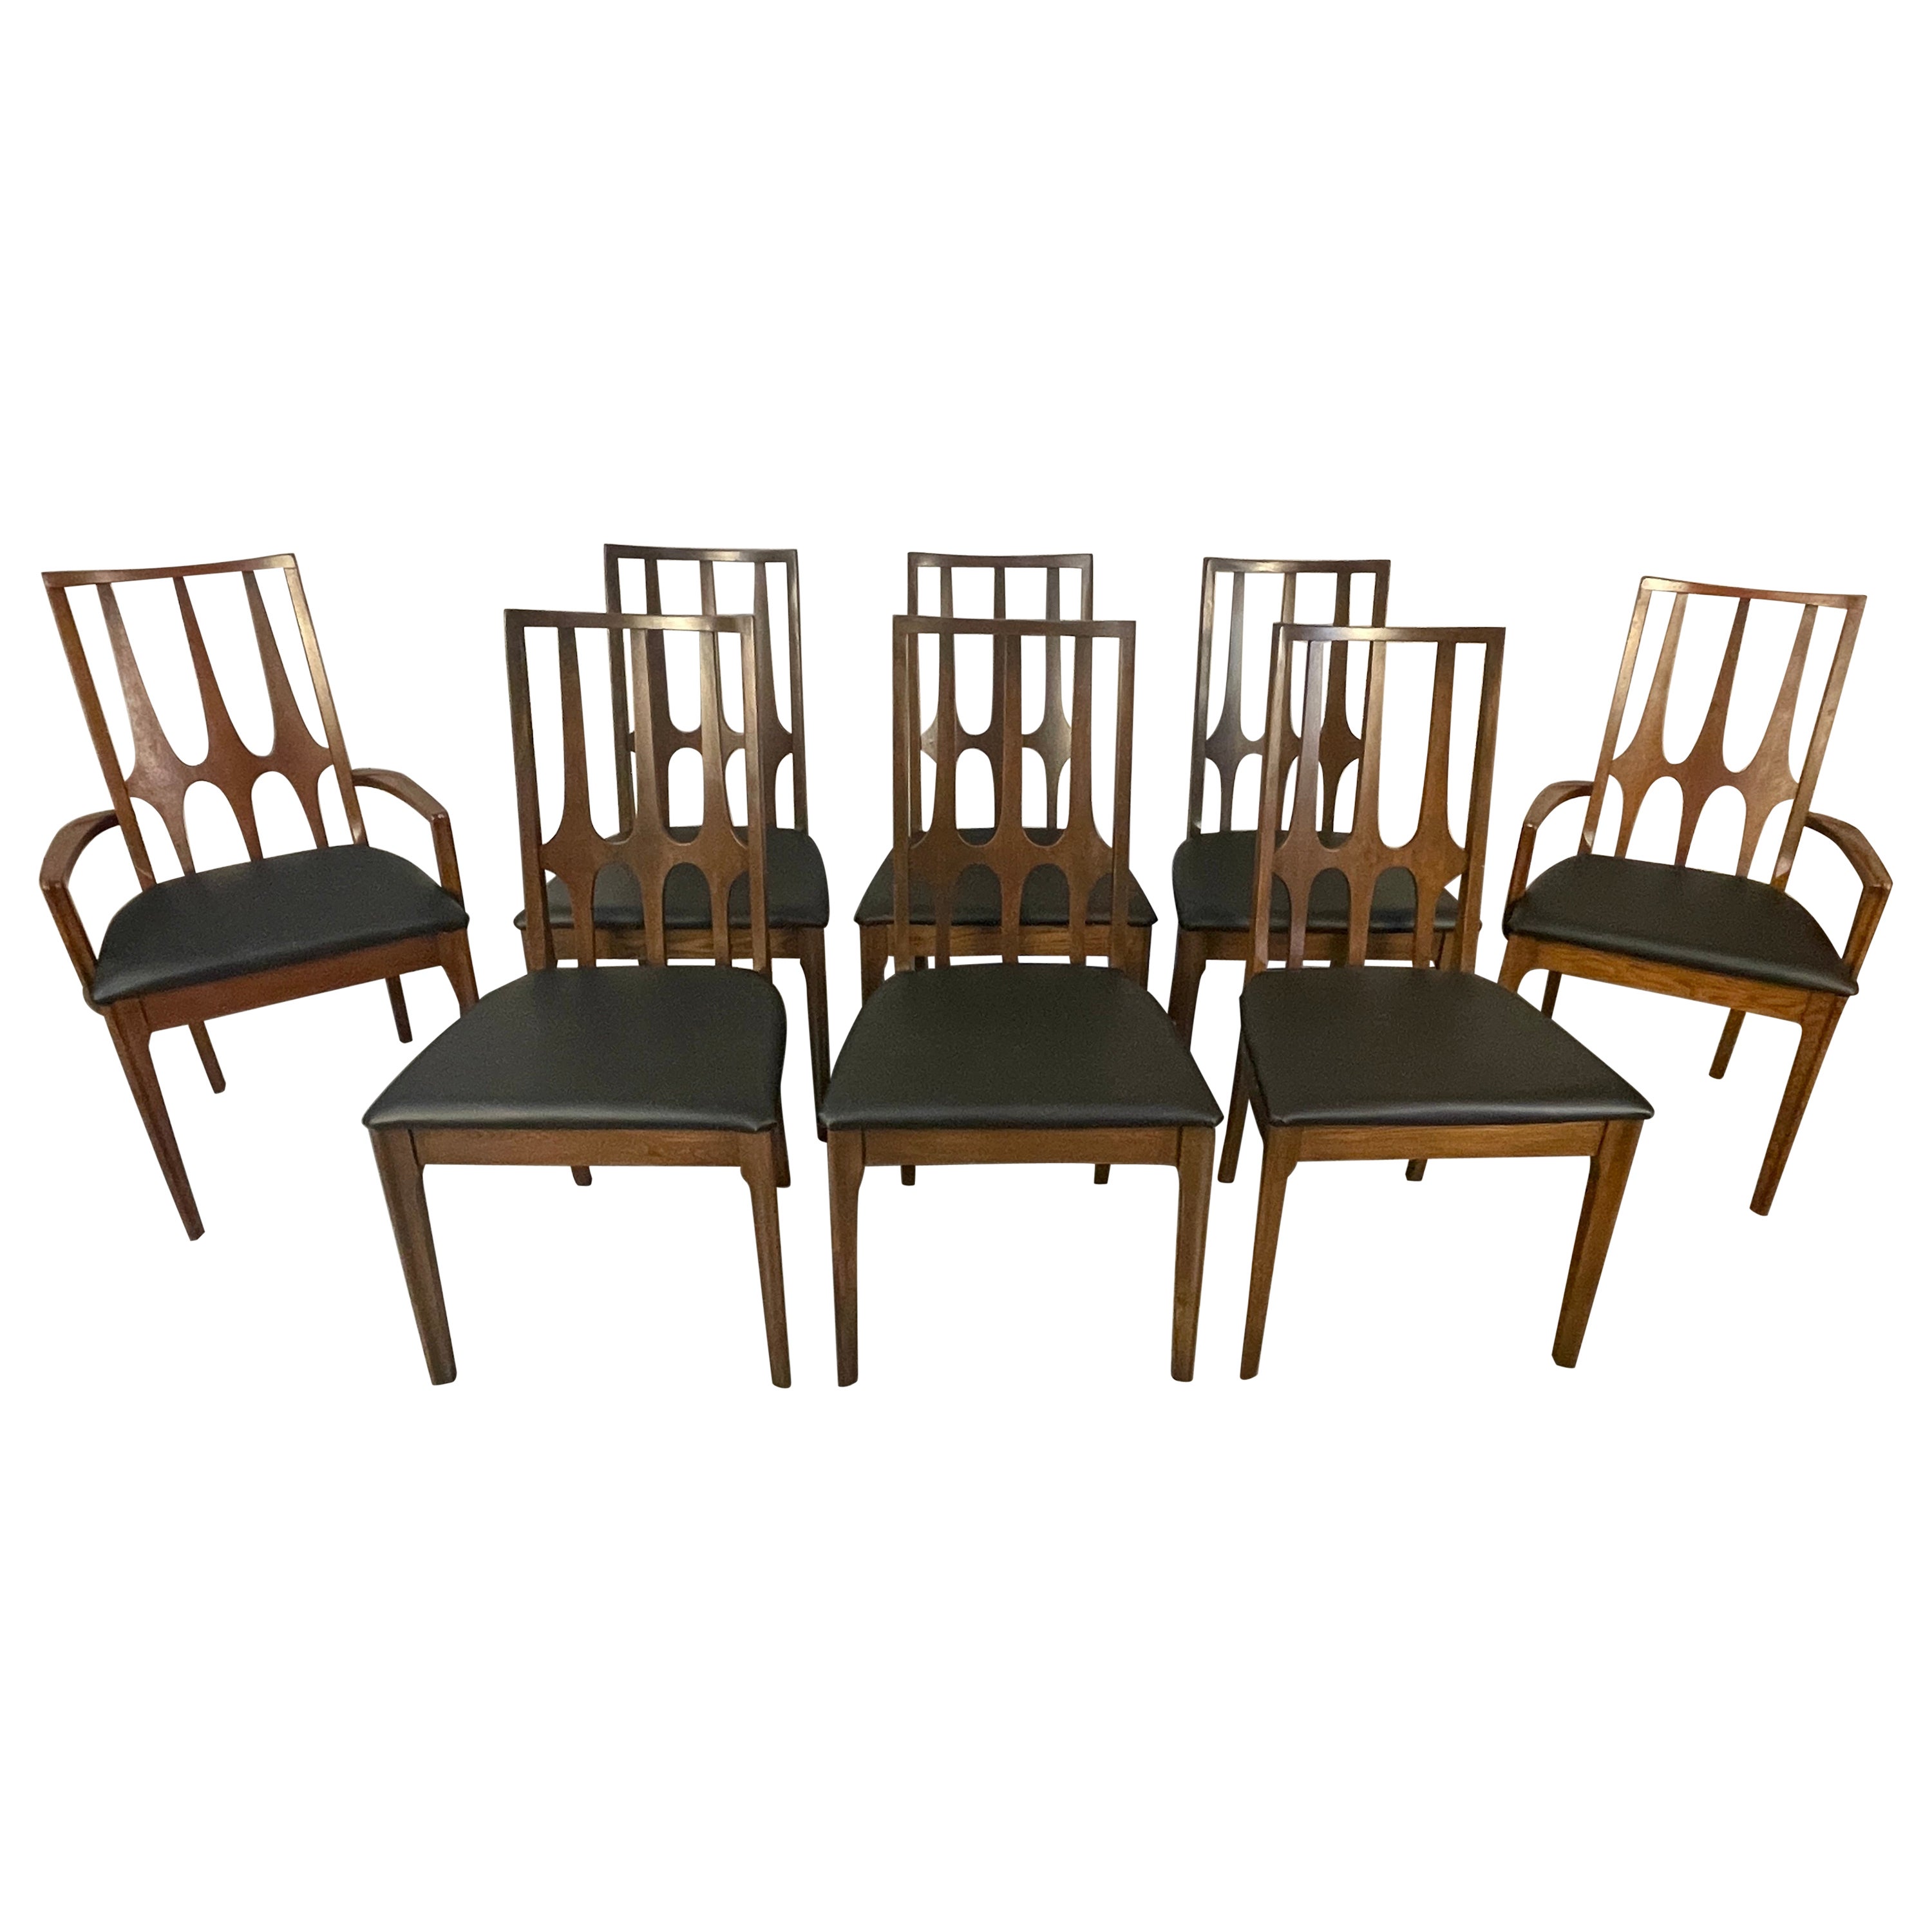 Broyhill Brasilia Dining Chairs, Set of 8